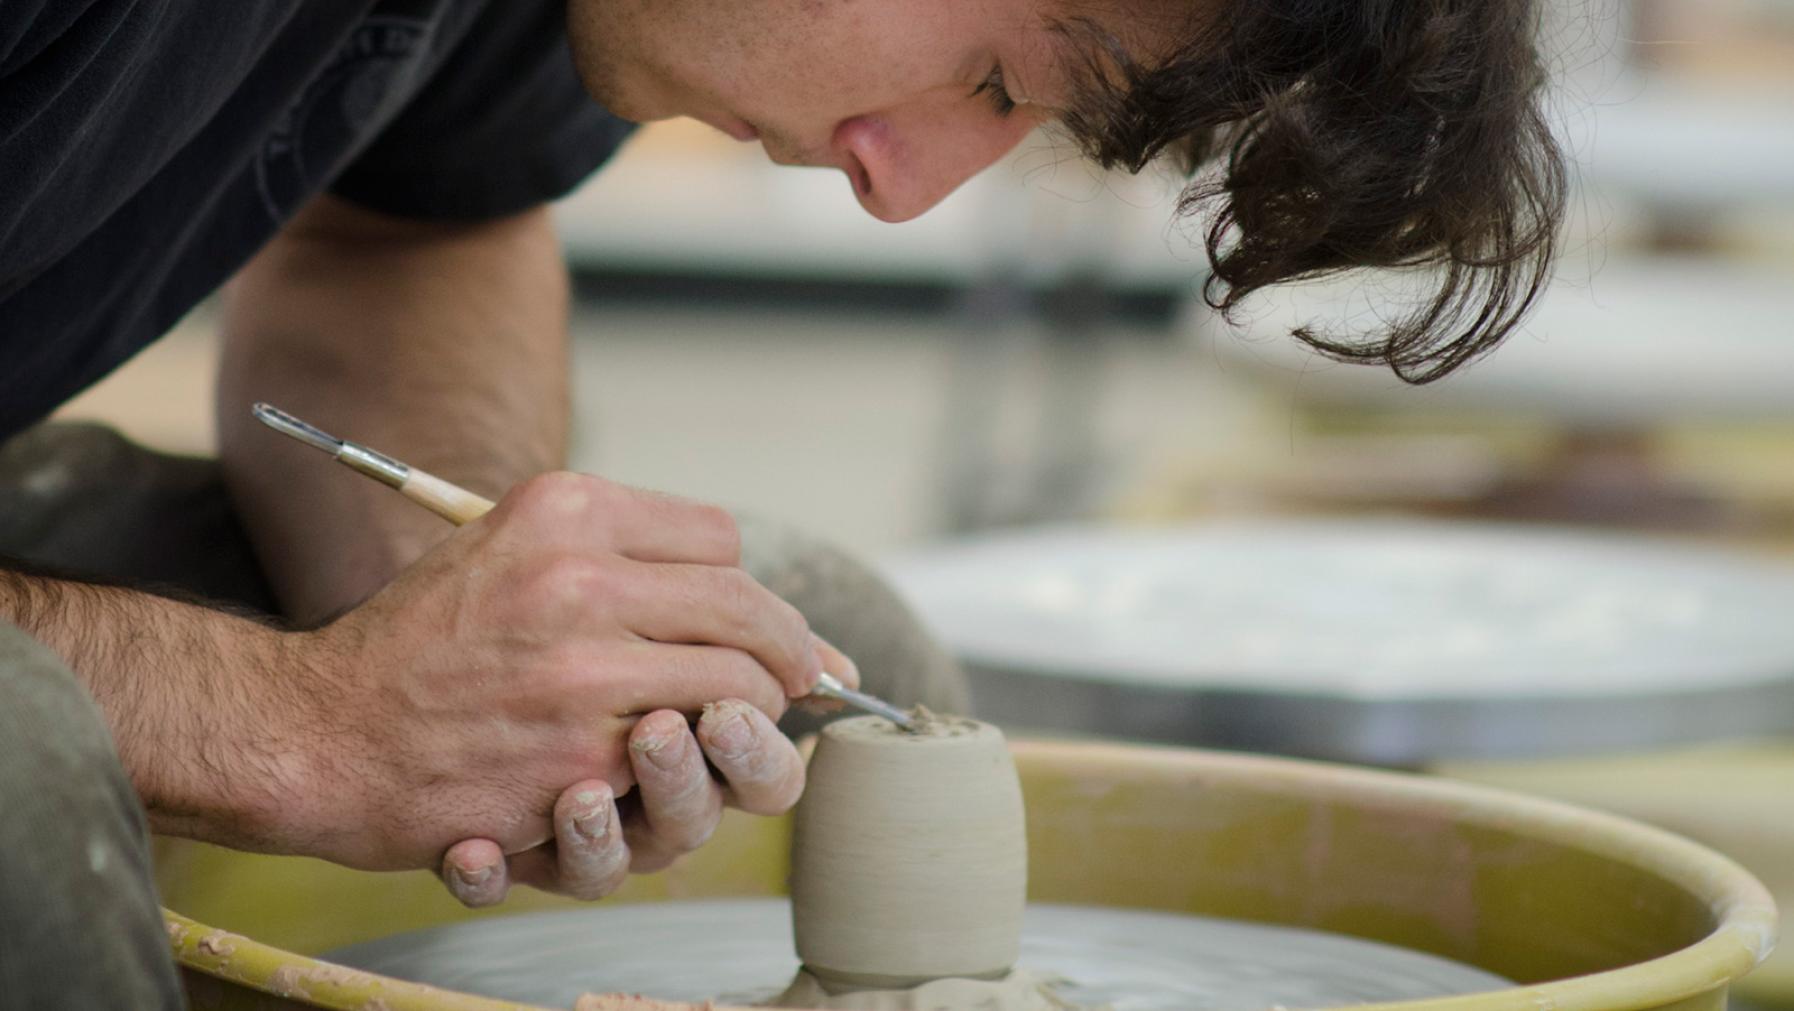 Student crafting a ceramic piece